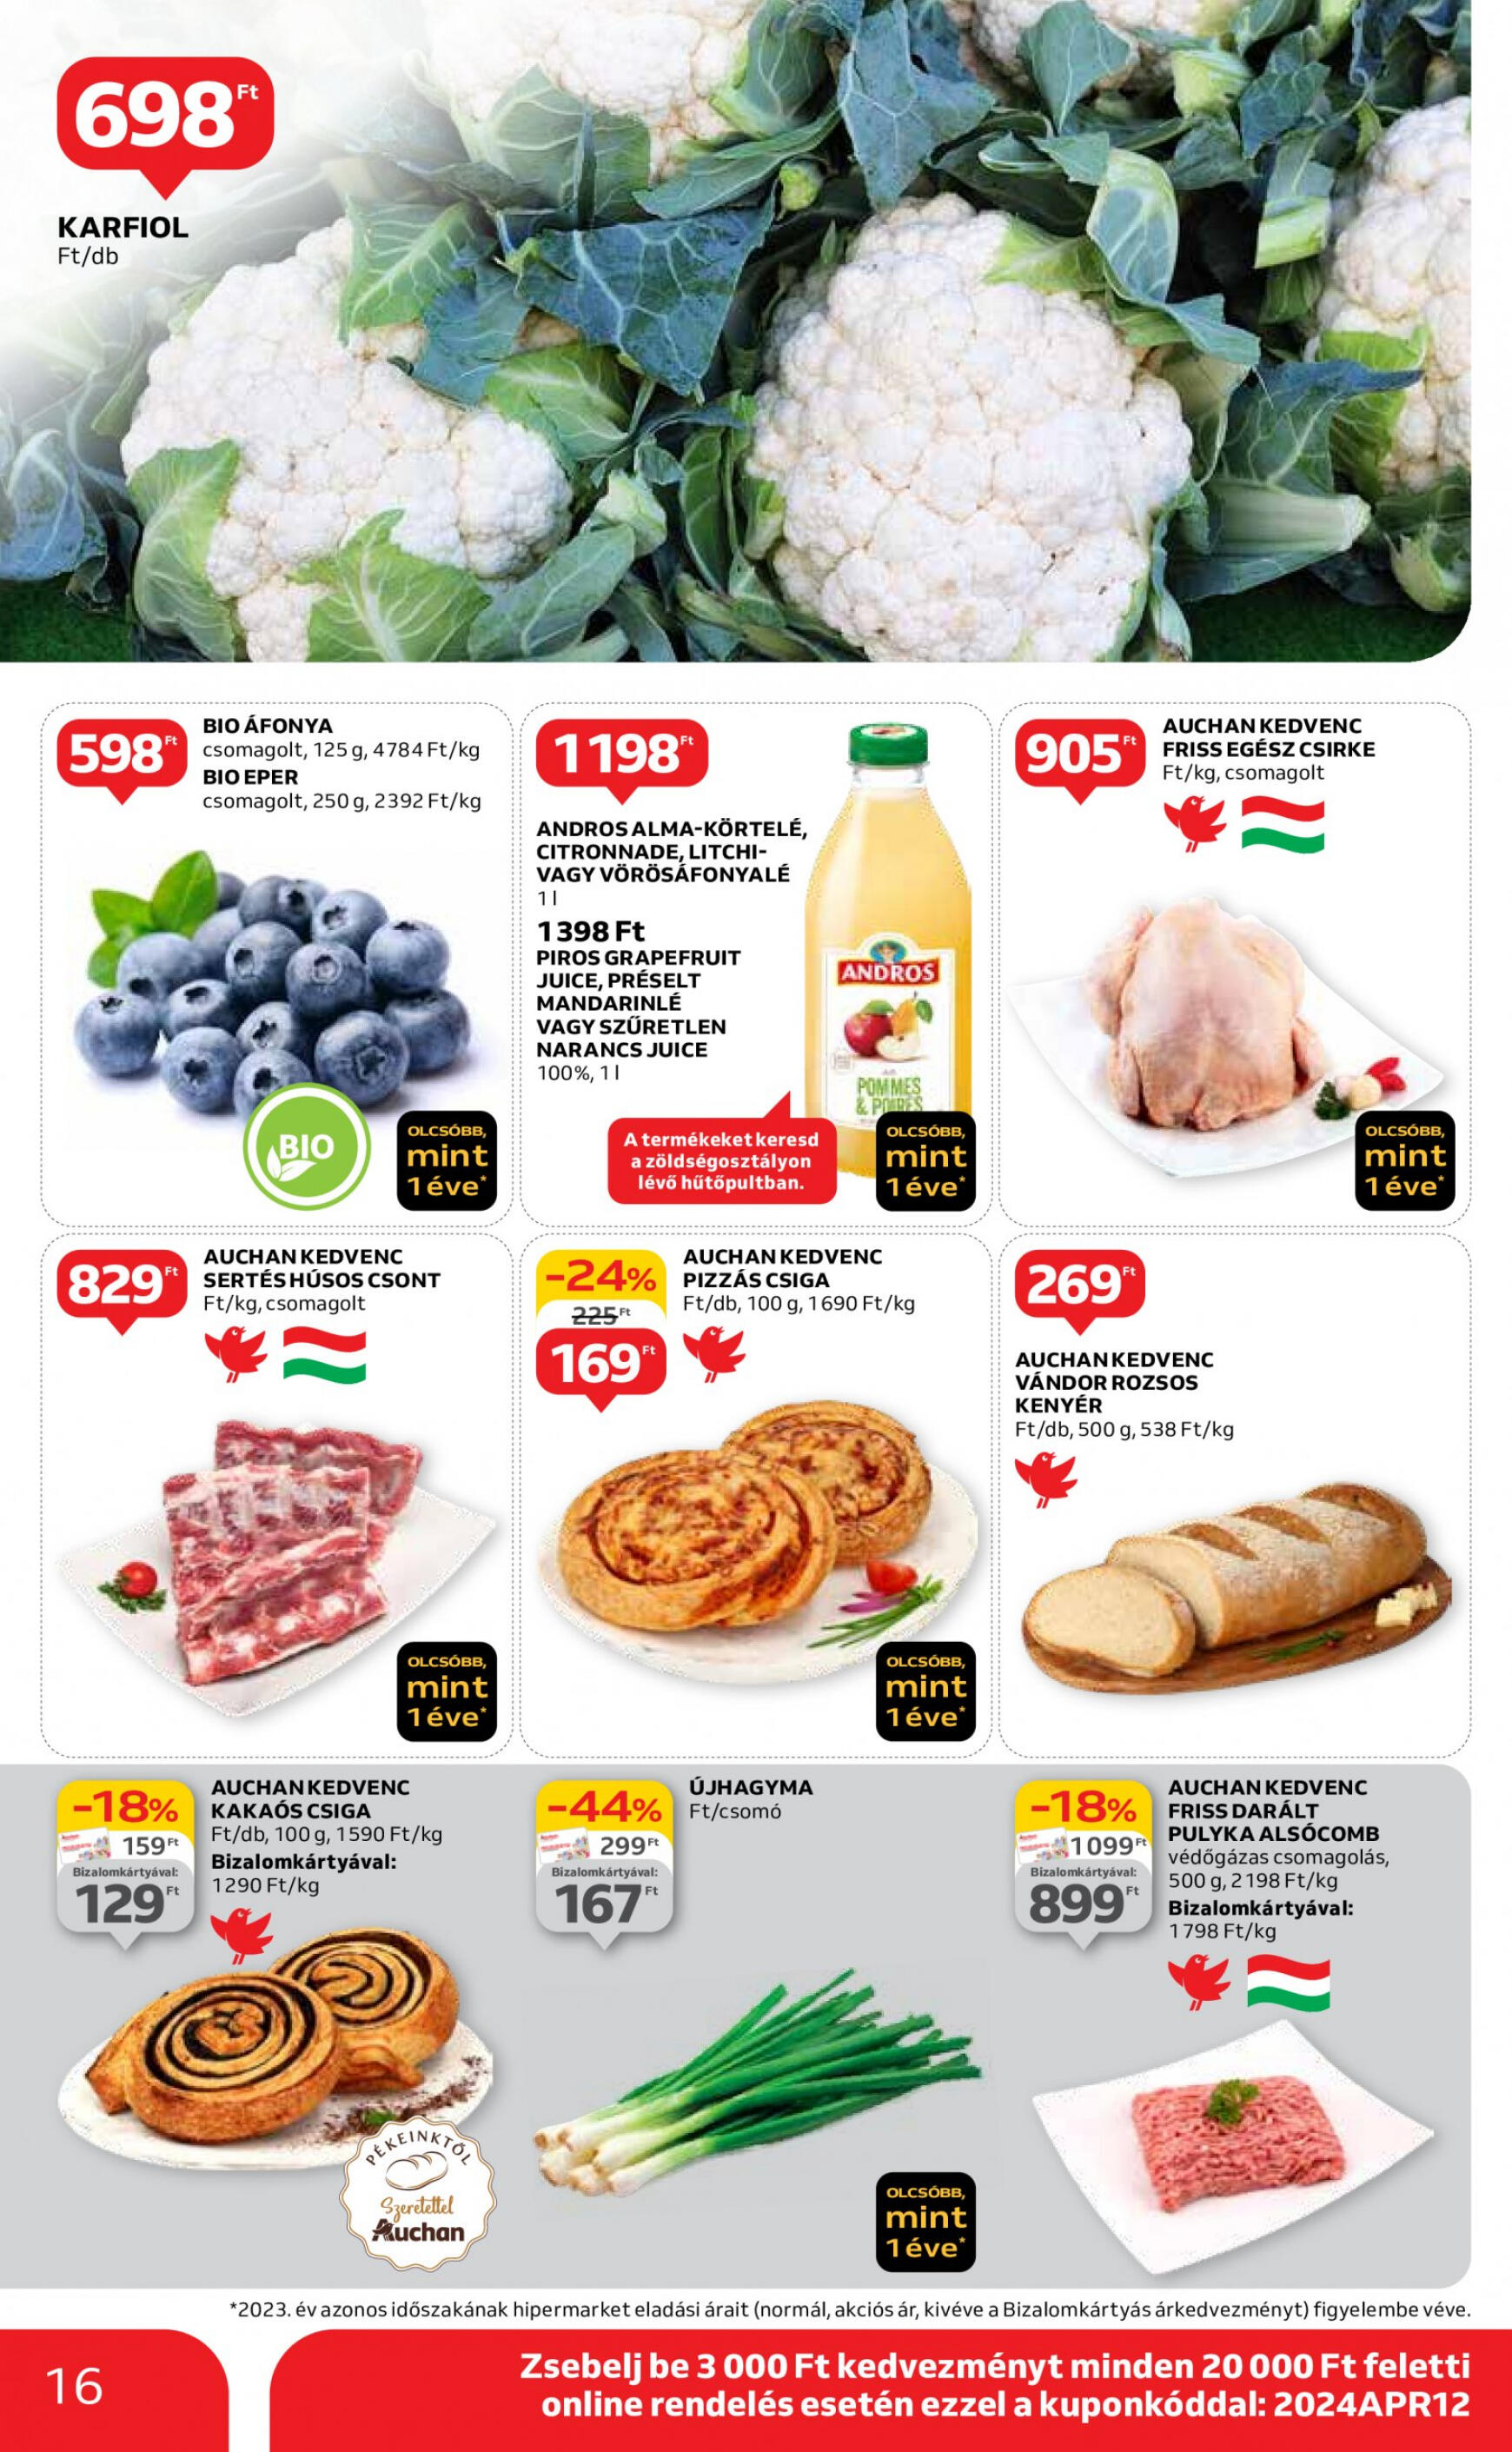 auchan - Aktuális újság Auchan 04.18. - 04.24. - page: 16